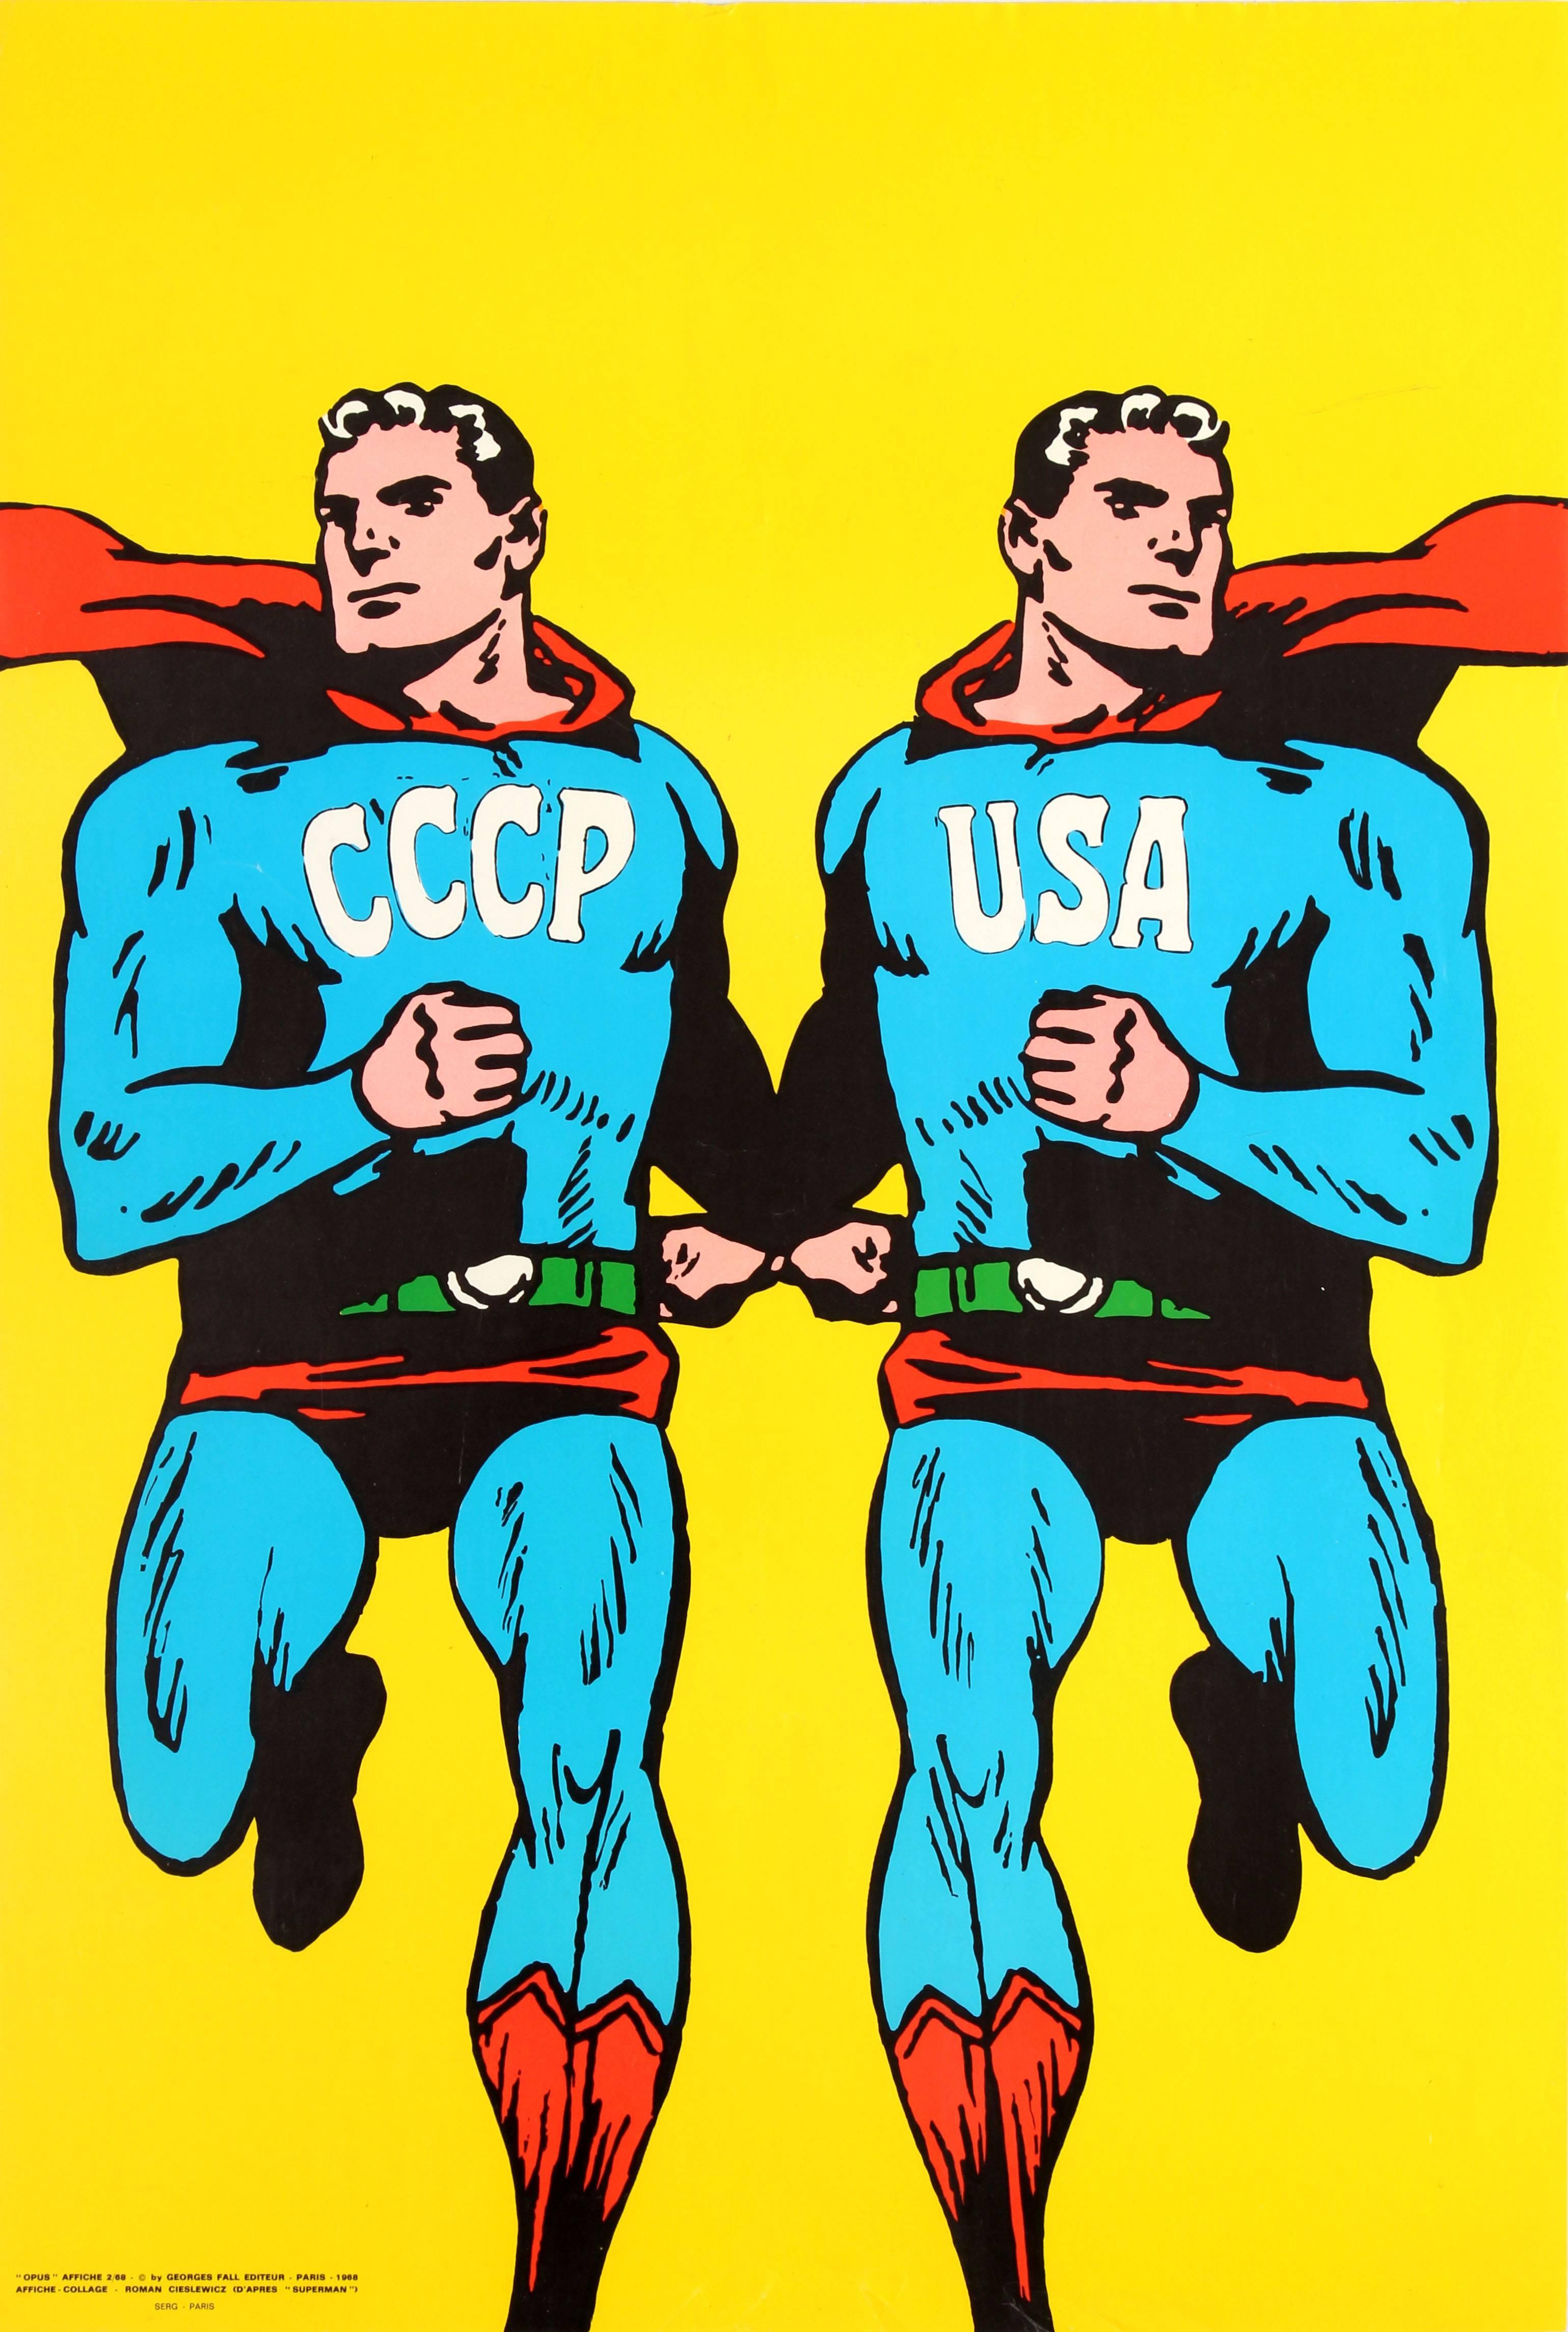 Roman Cieslewicz Print - Original Vintage 1968 Cold War Superman Style Poster by Cieslewicz USSR CCCP USA